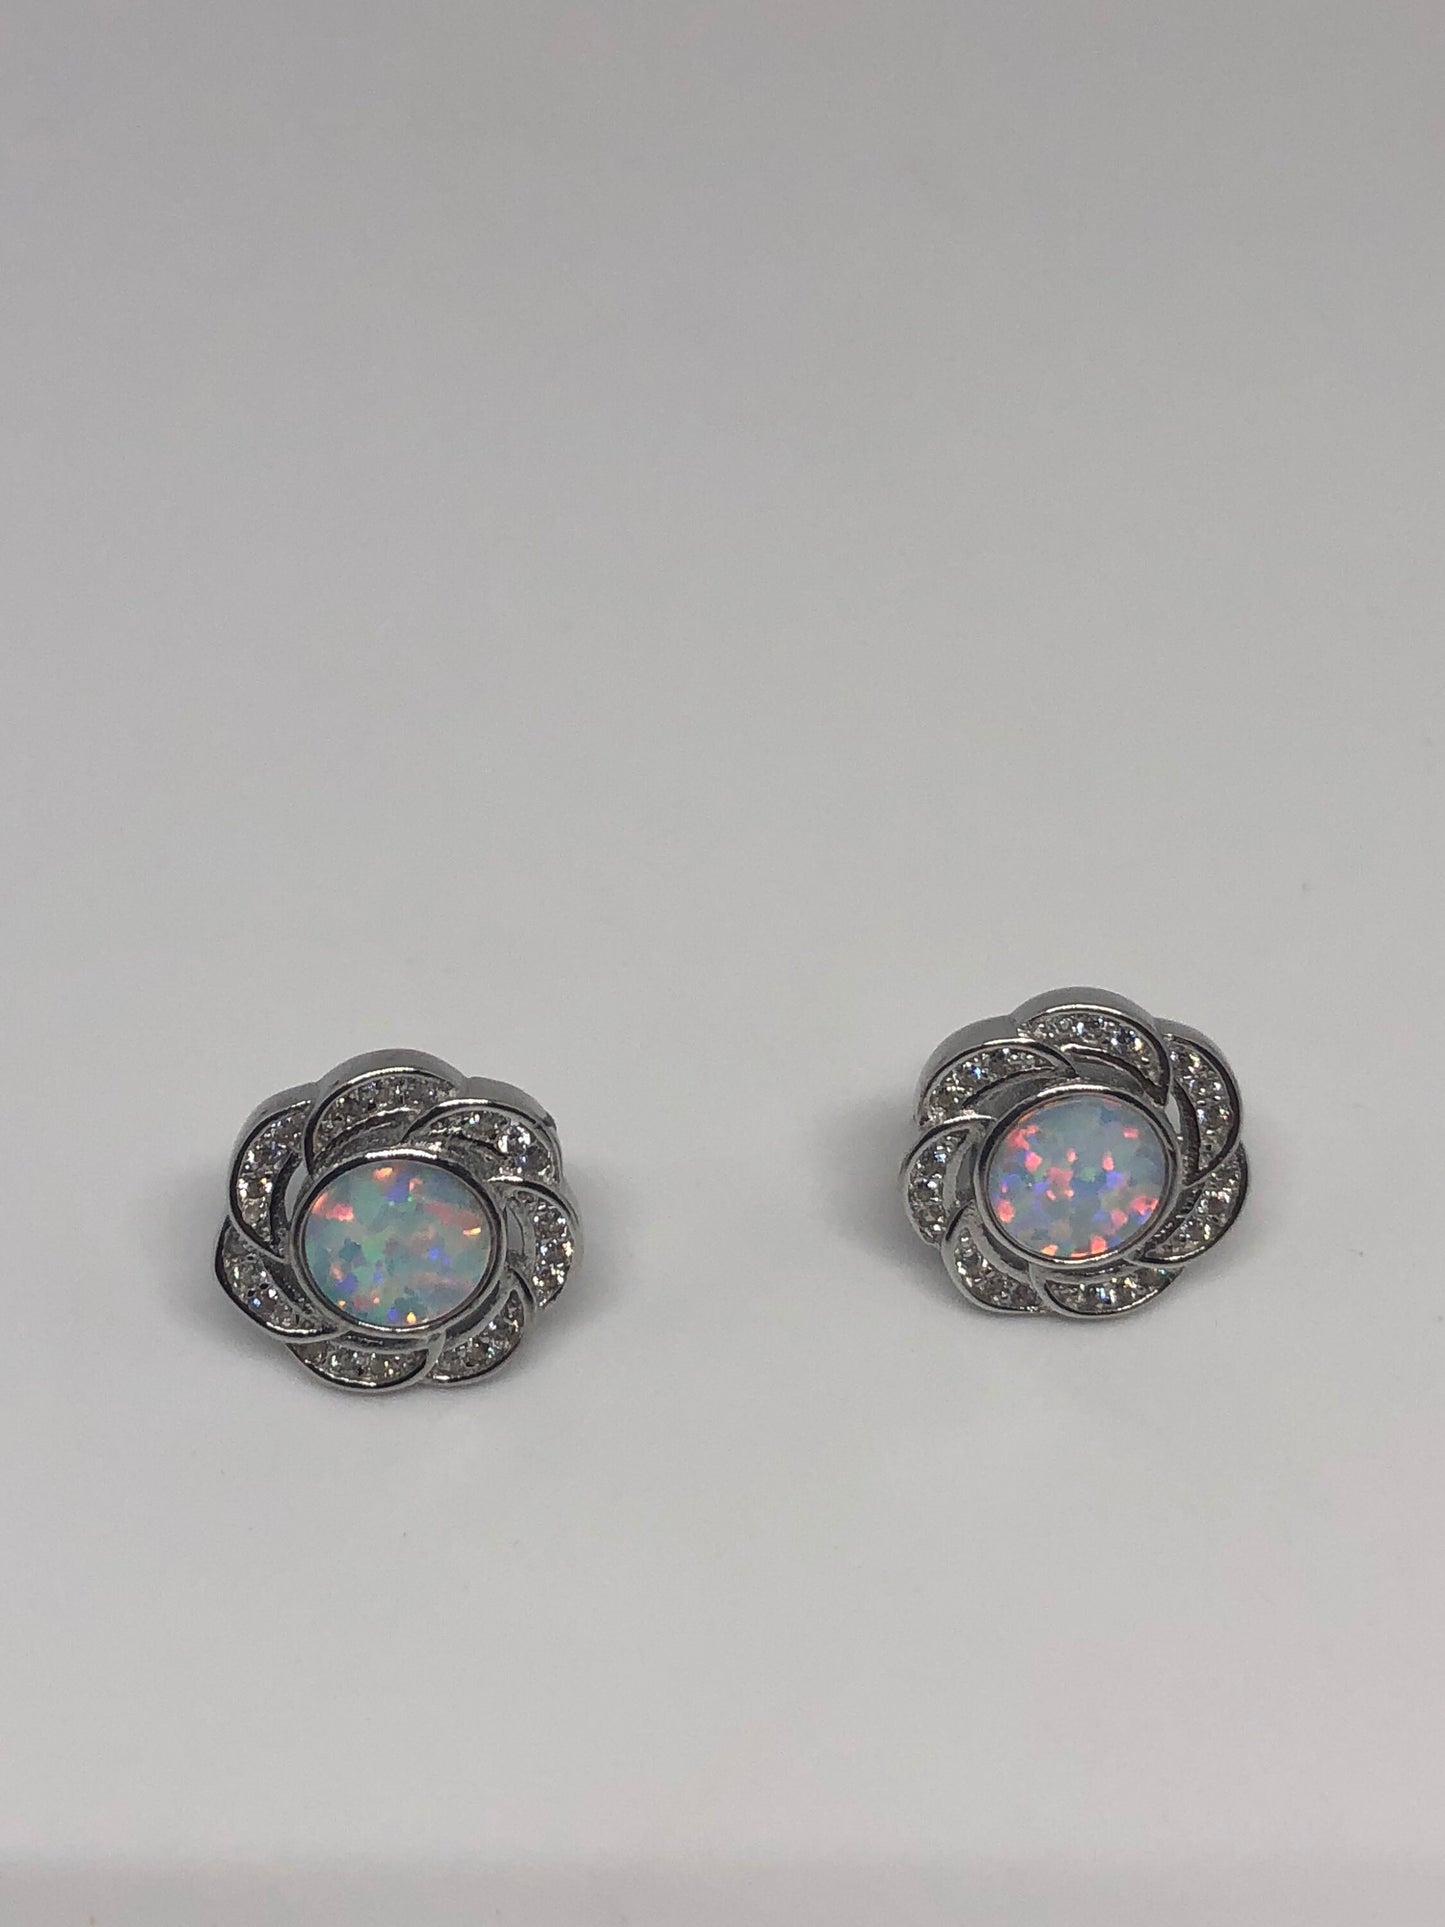 Vintage White Opal Earrings 925 Sterling Silver stud button